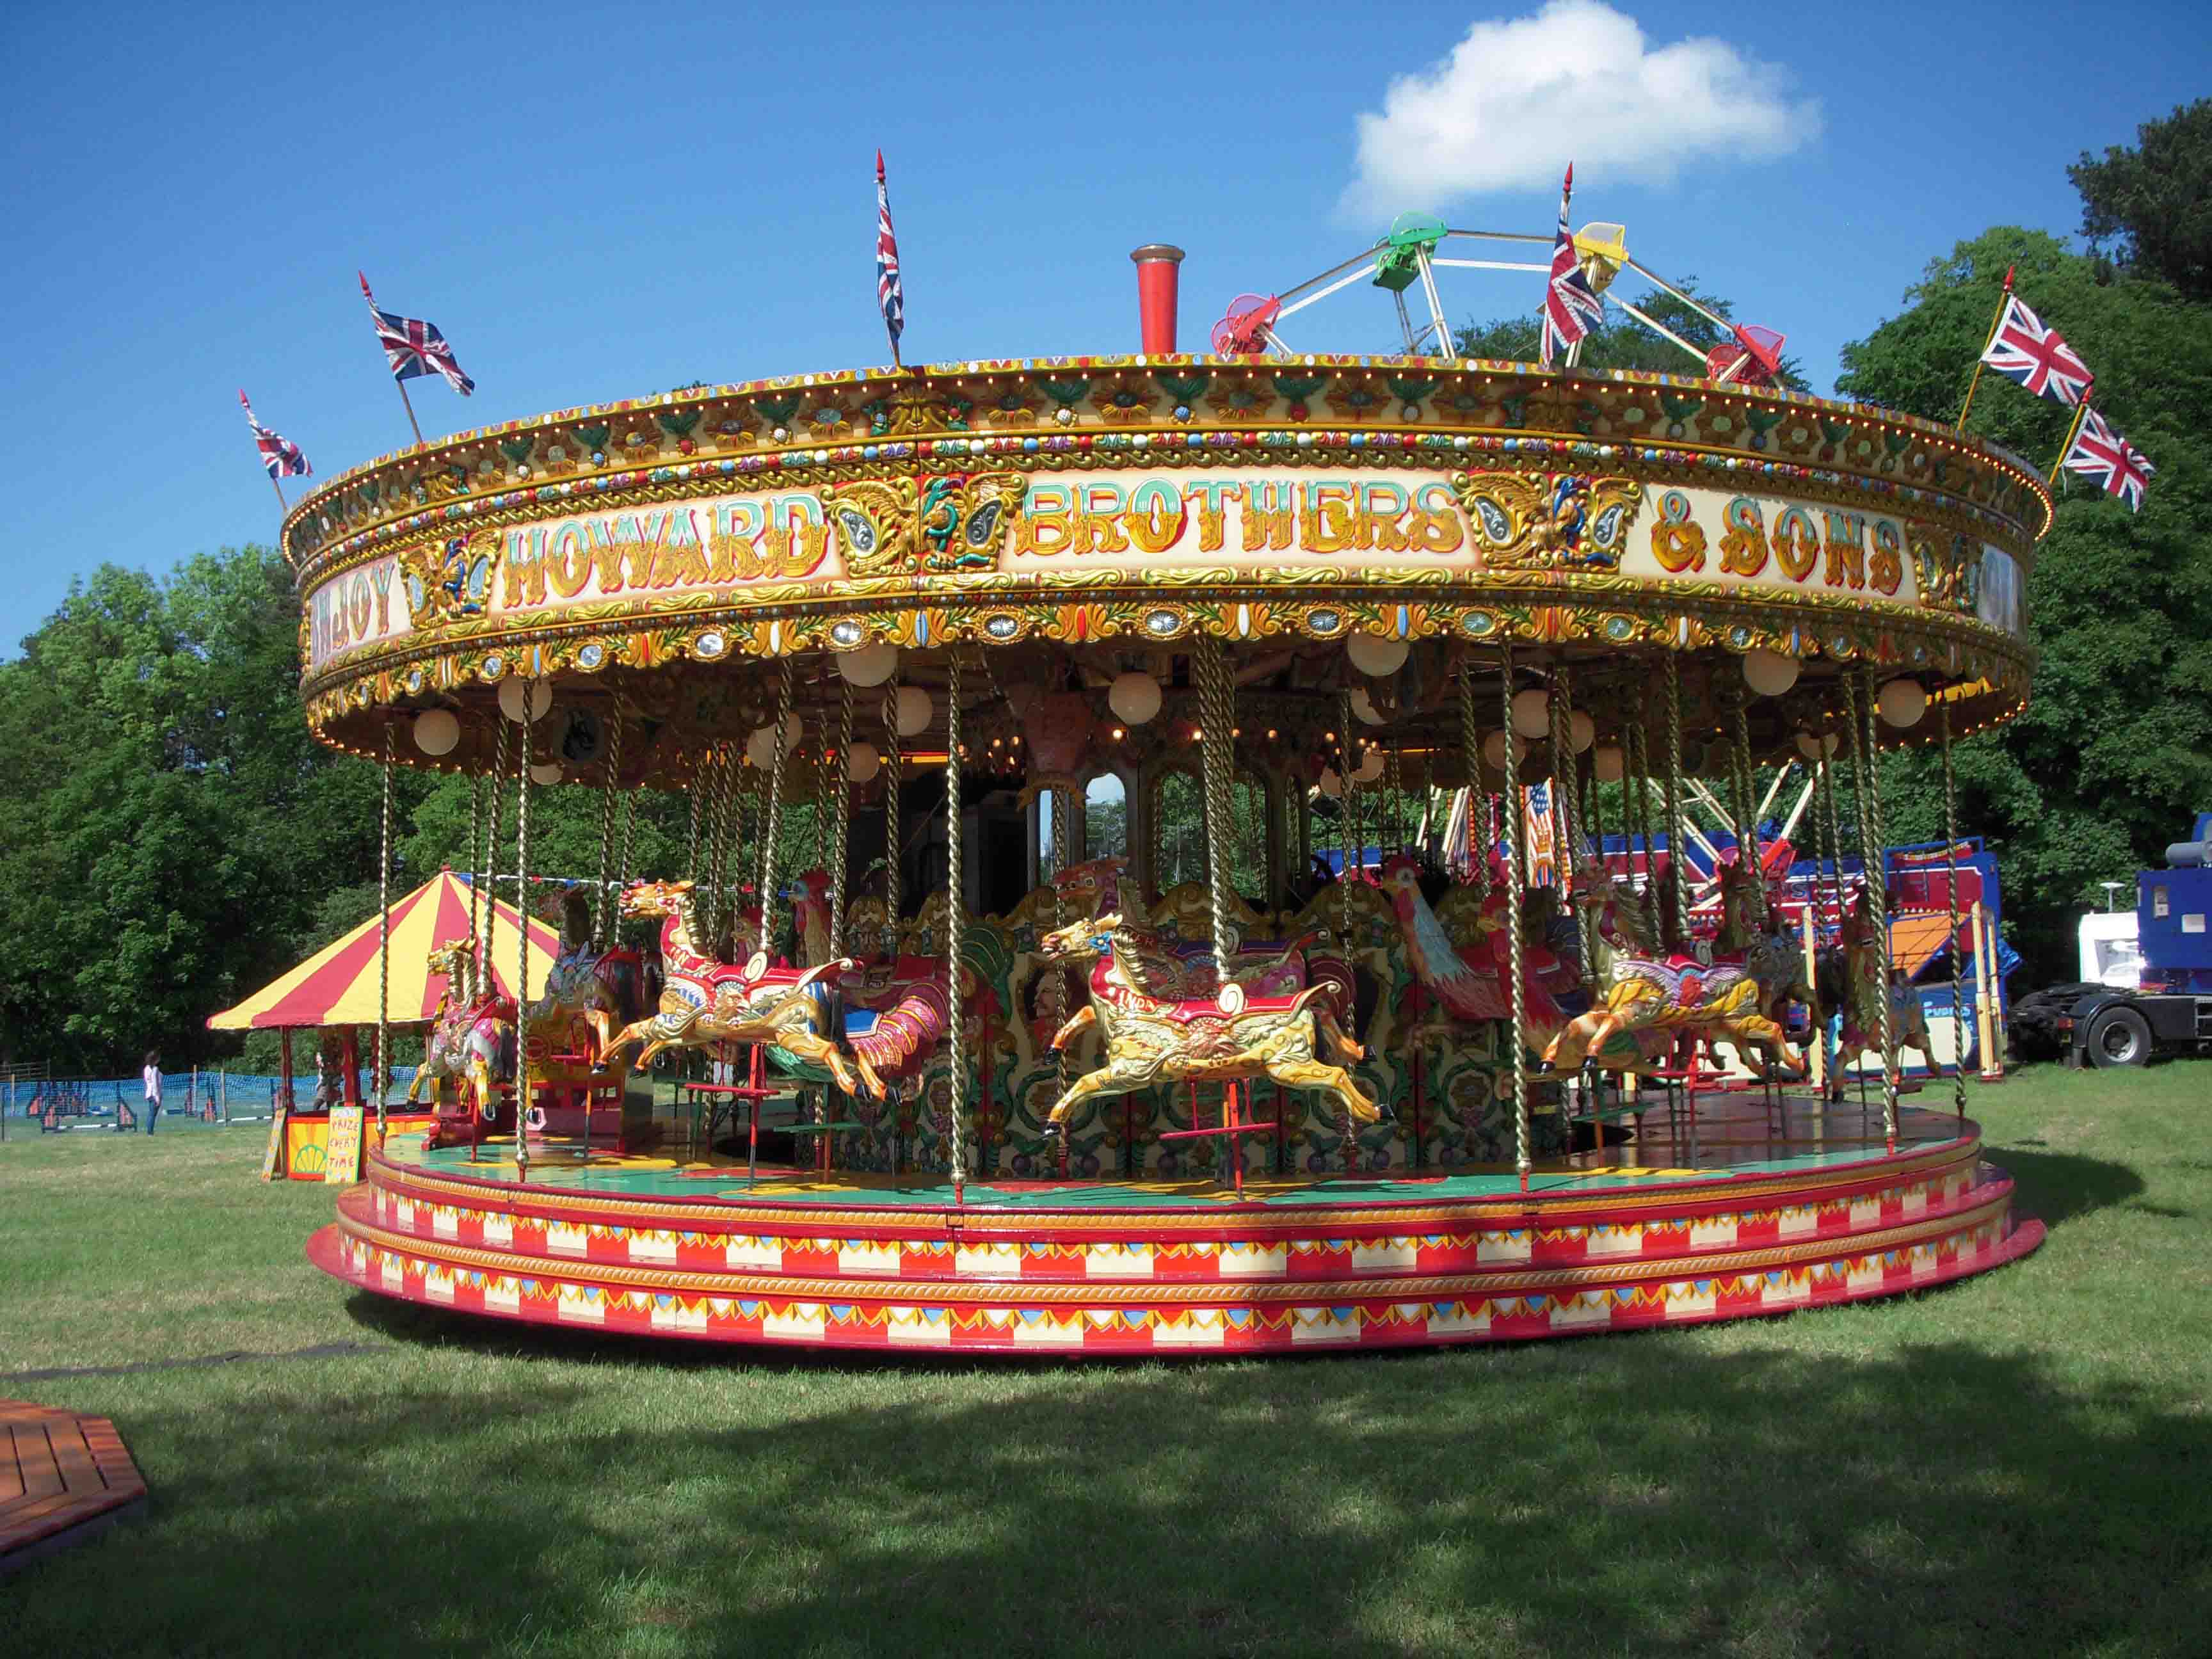 Howards Steam Gallopers (or Carousel)